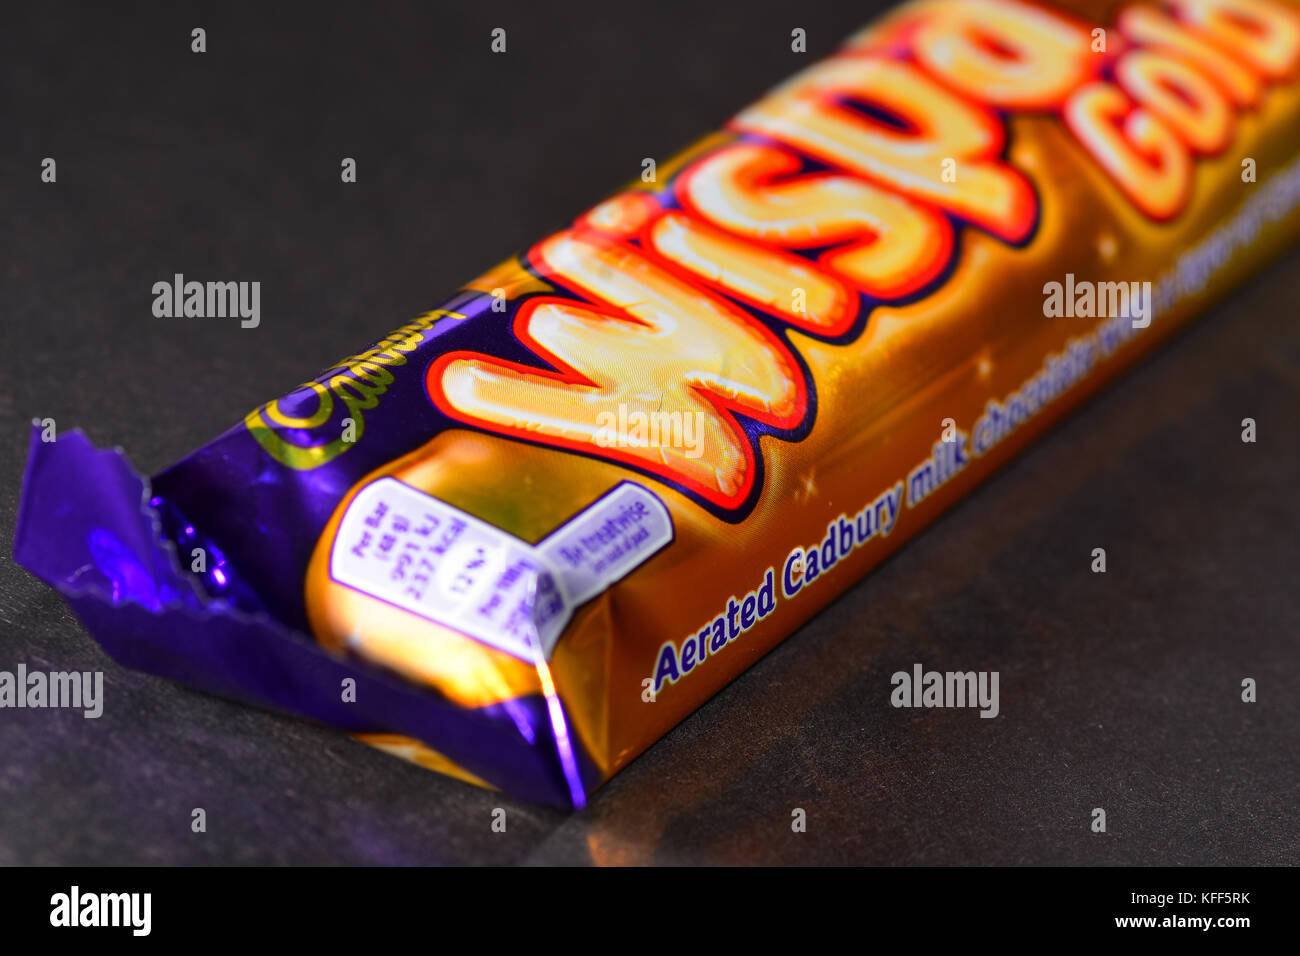 Cadbury's wispa bar Gold Edition Banque D'Images